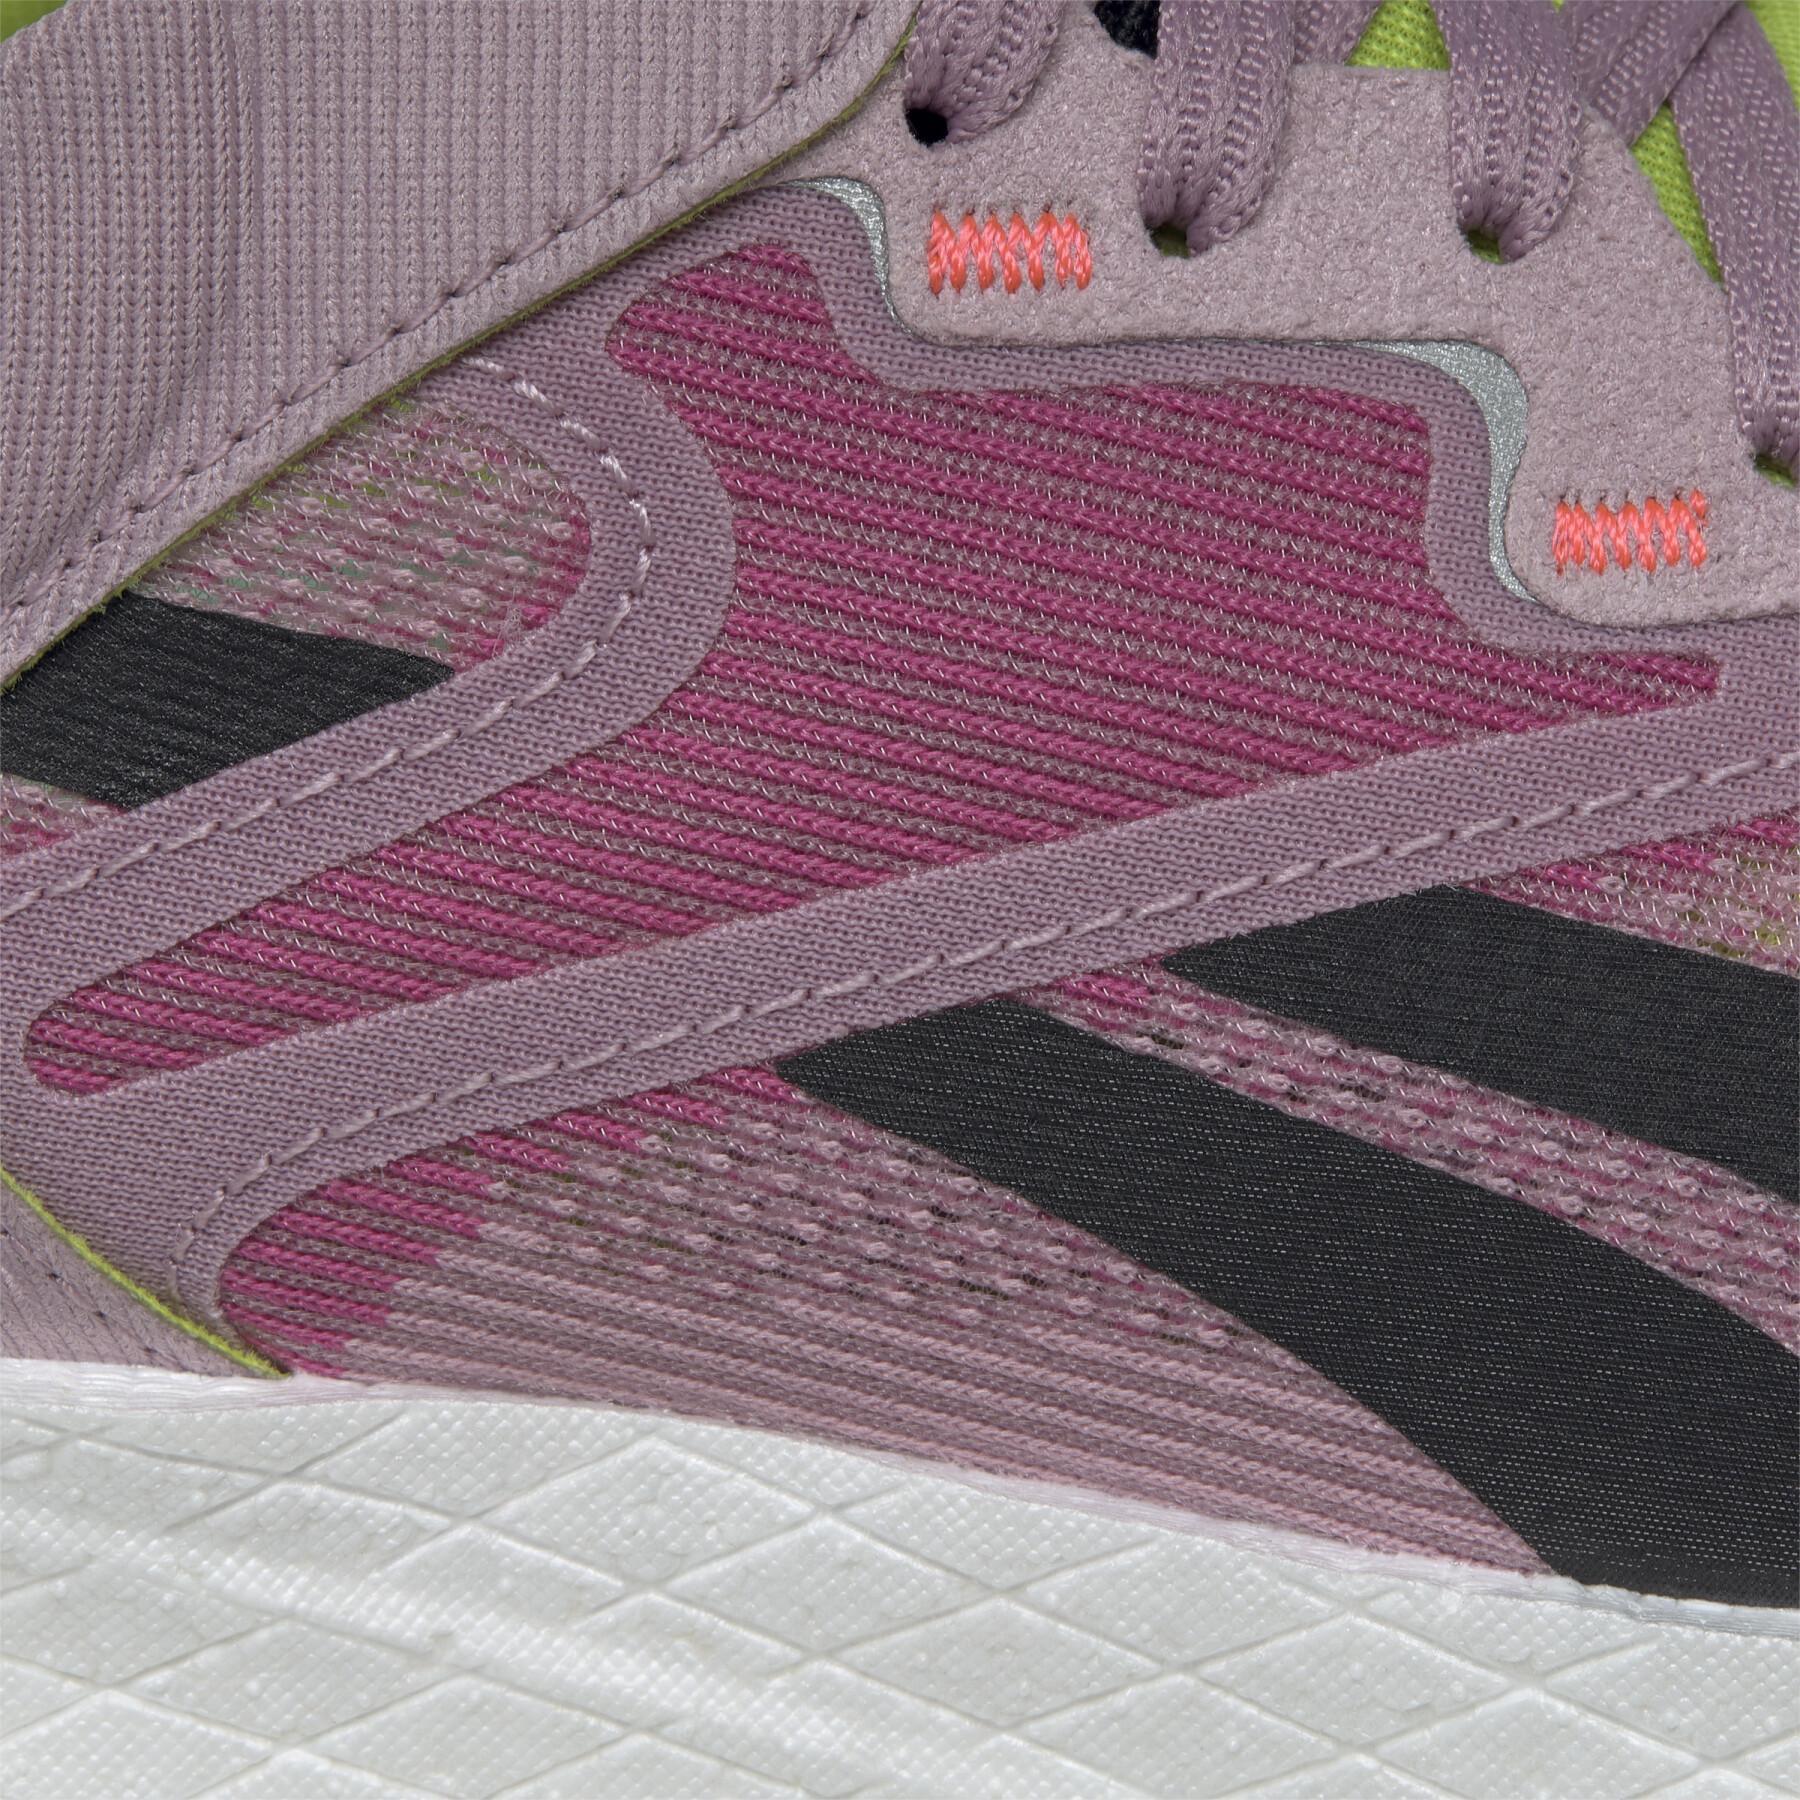 Women's running shoes Reebok Floatride Energy Symmetros 2